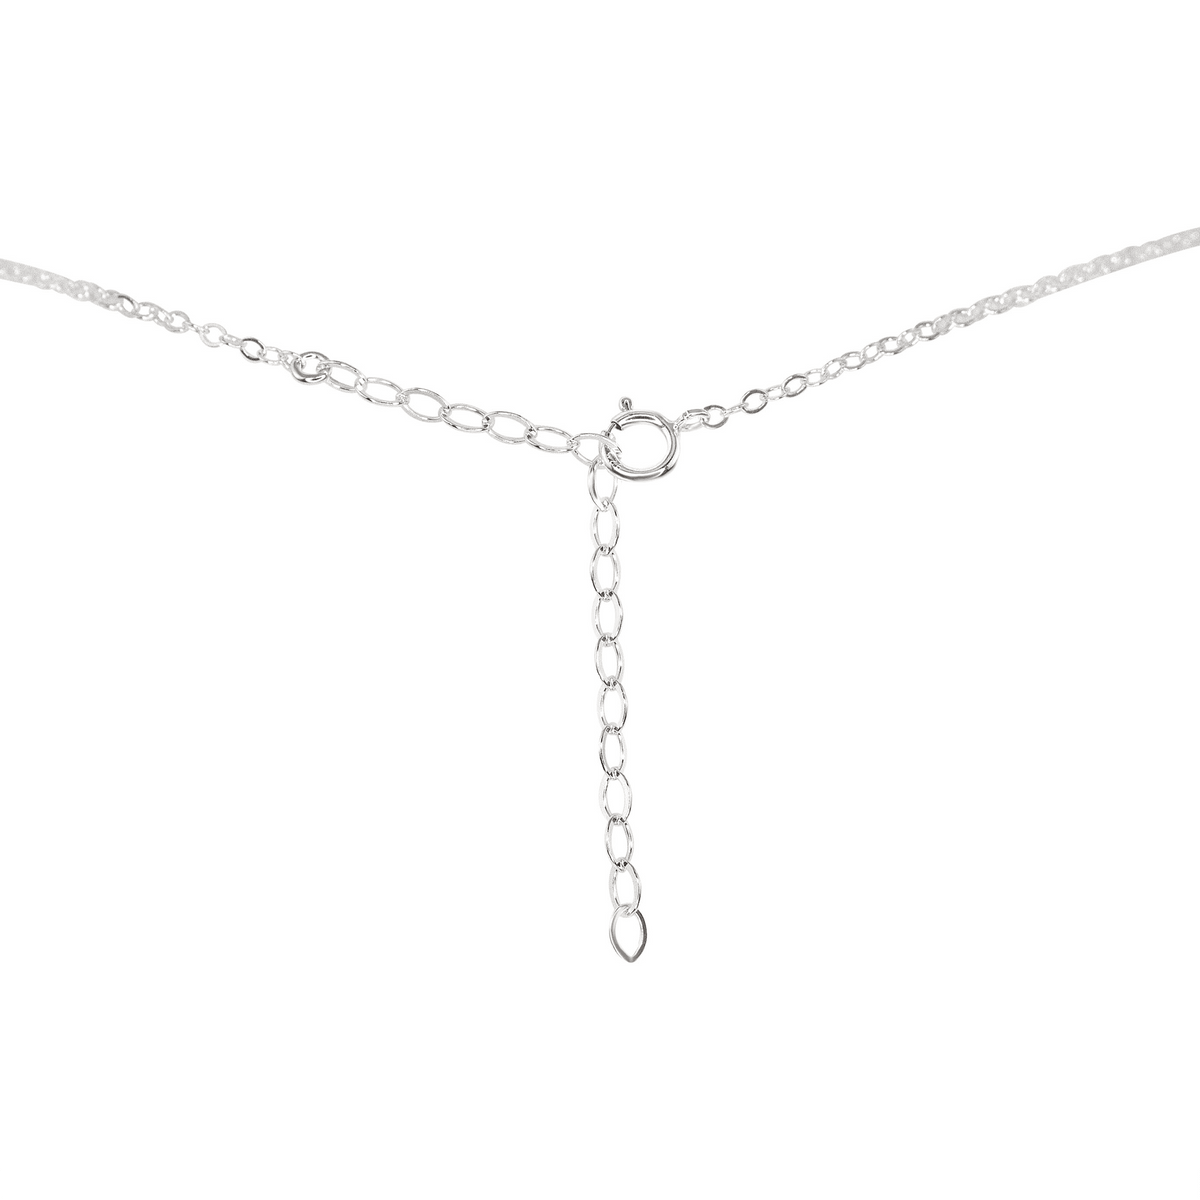 Dainty Amethyst Lariat Necklace - Dainty Amethyst Lariat Necklace - 14k Gold Fill - Luna Tide Handmade Crystal Jewellery